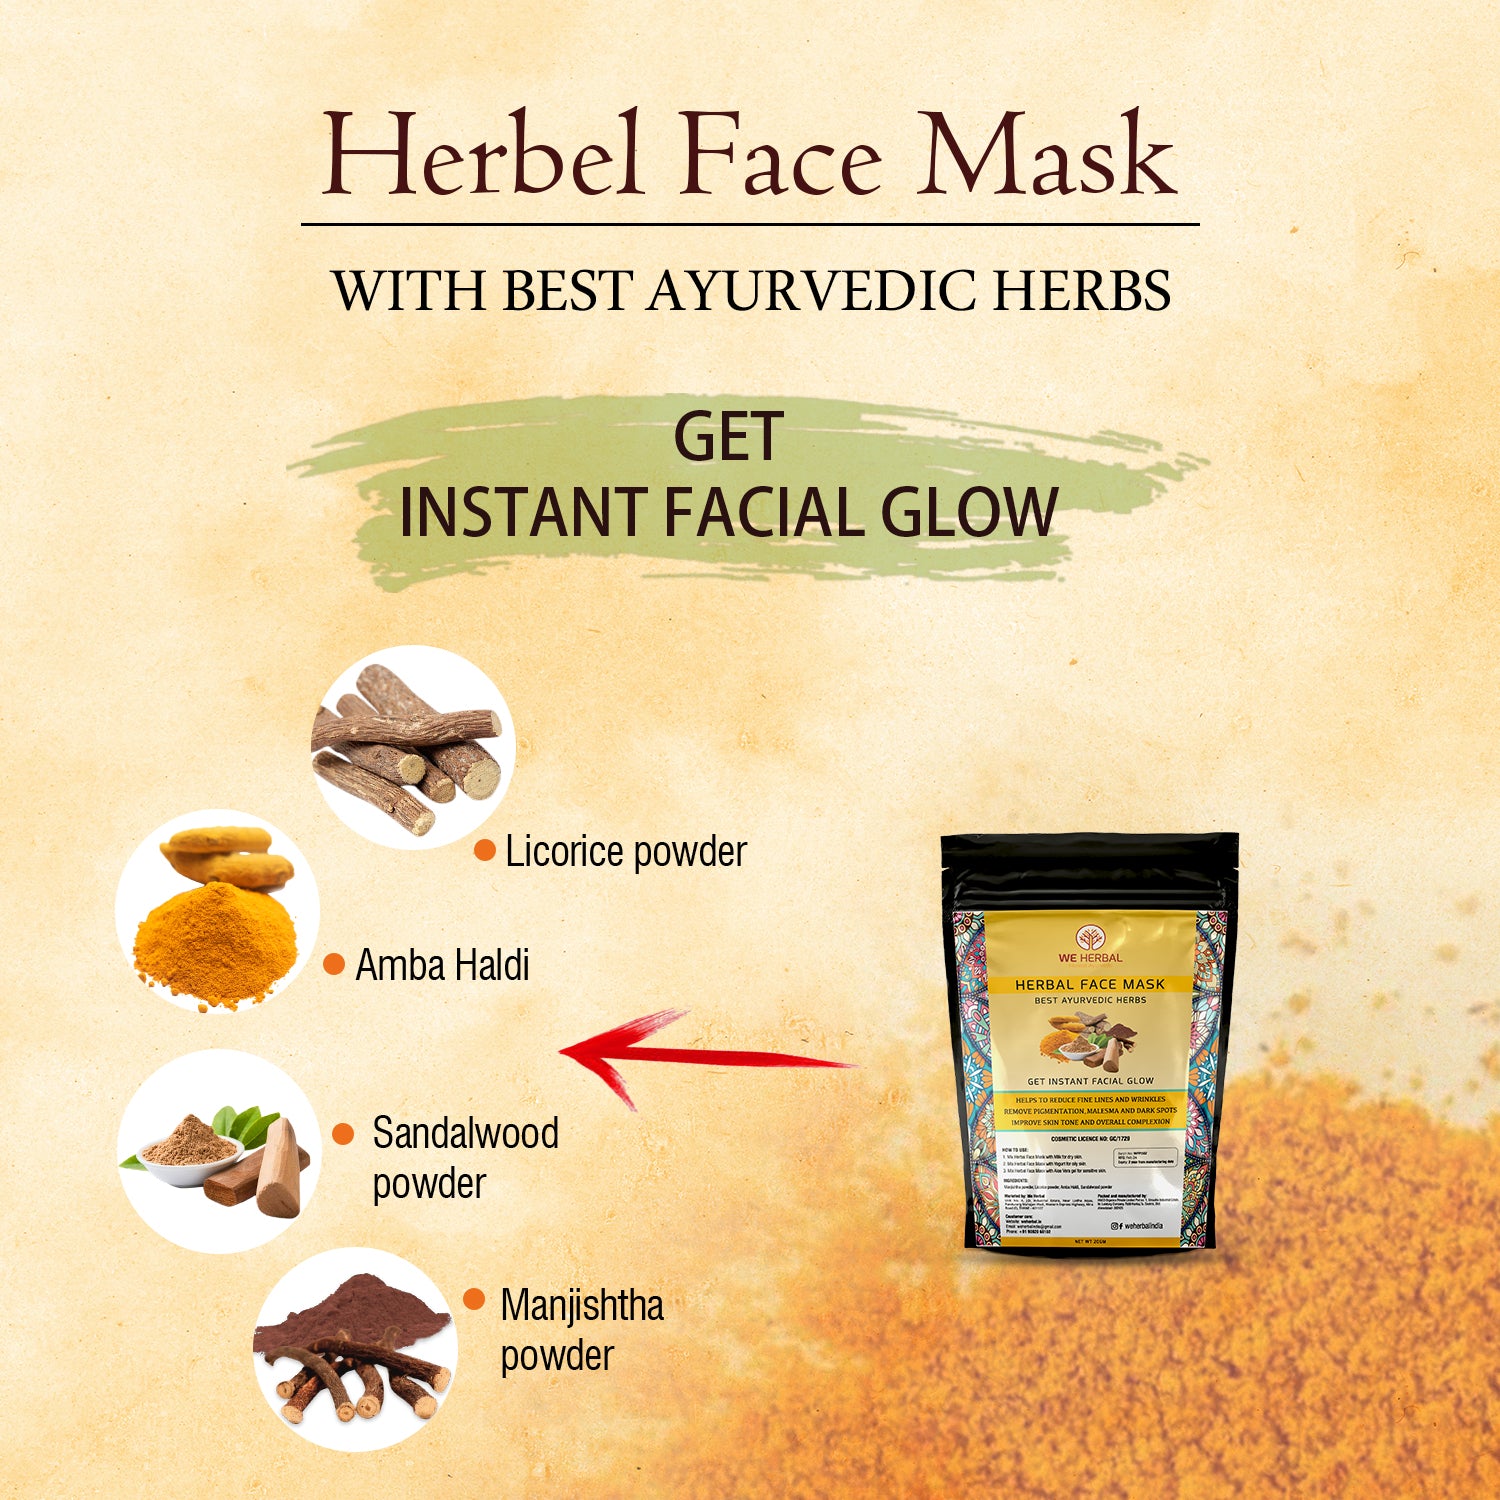 Herbal Face Mask | We Herbal